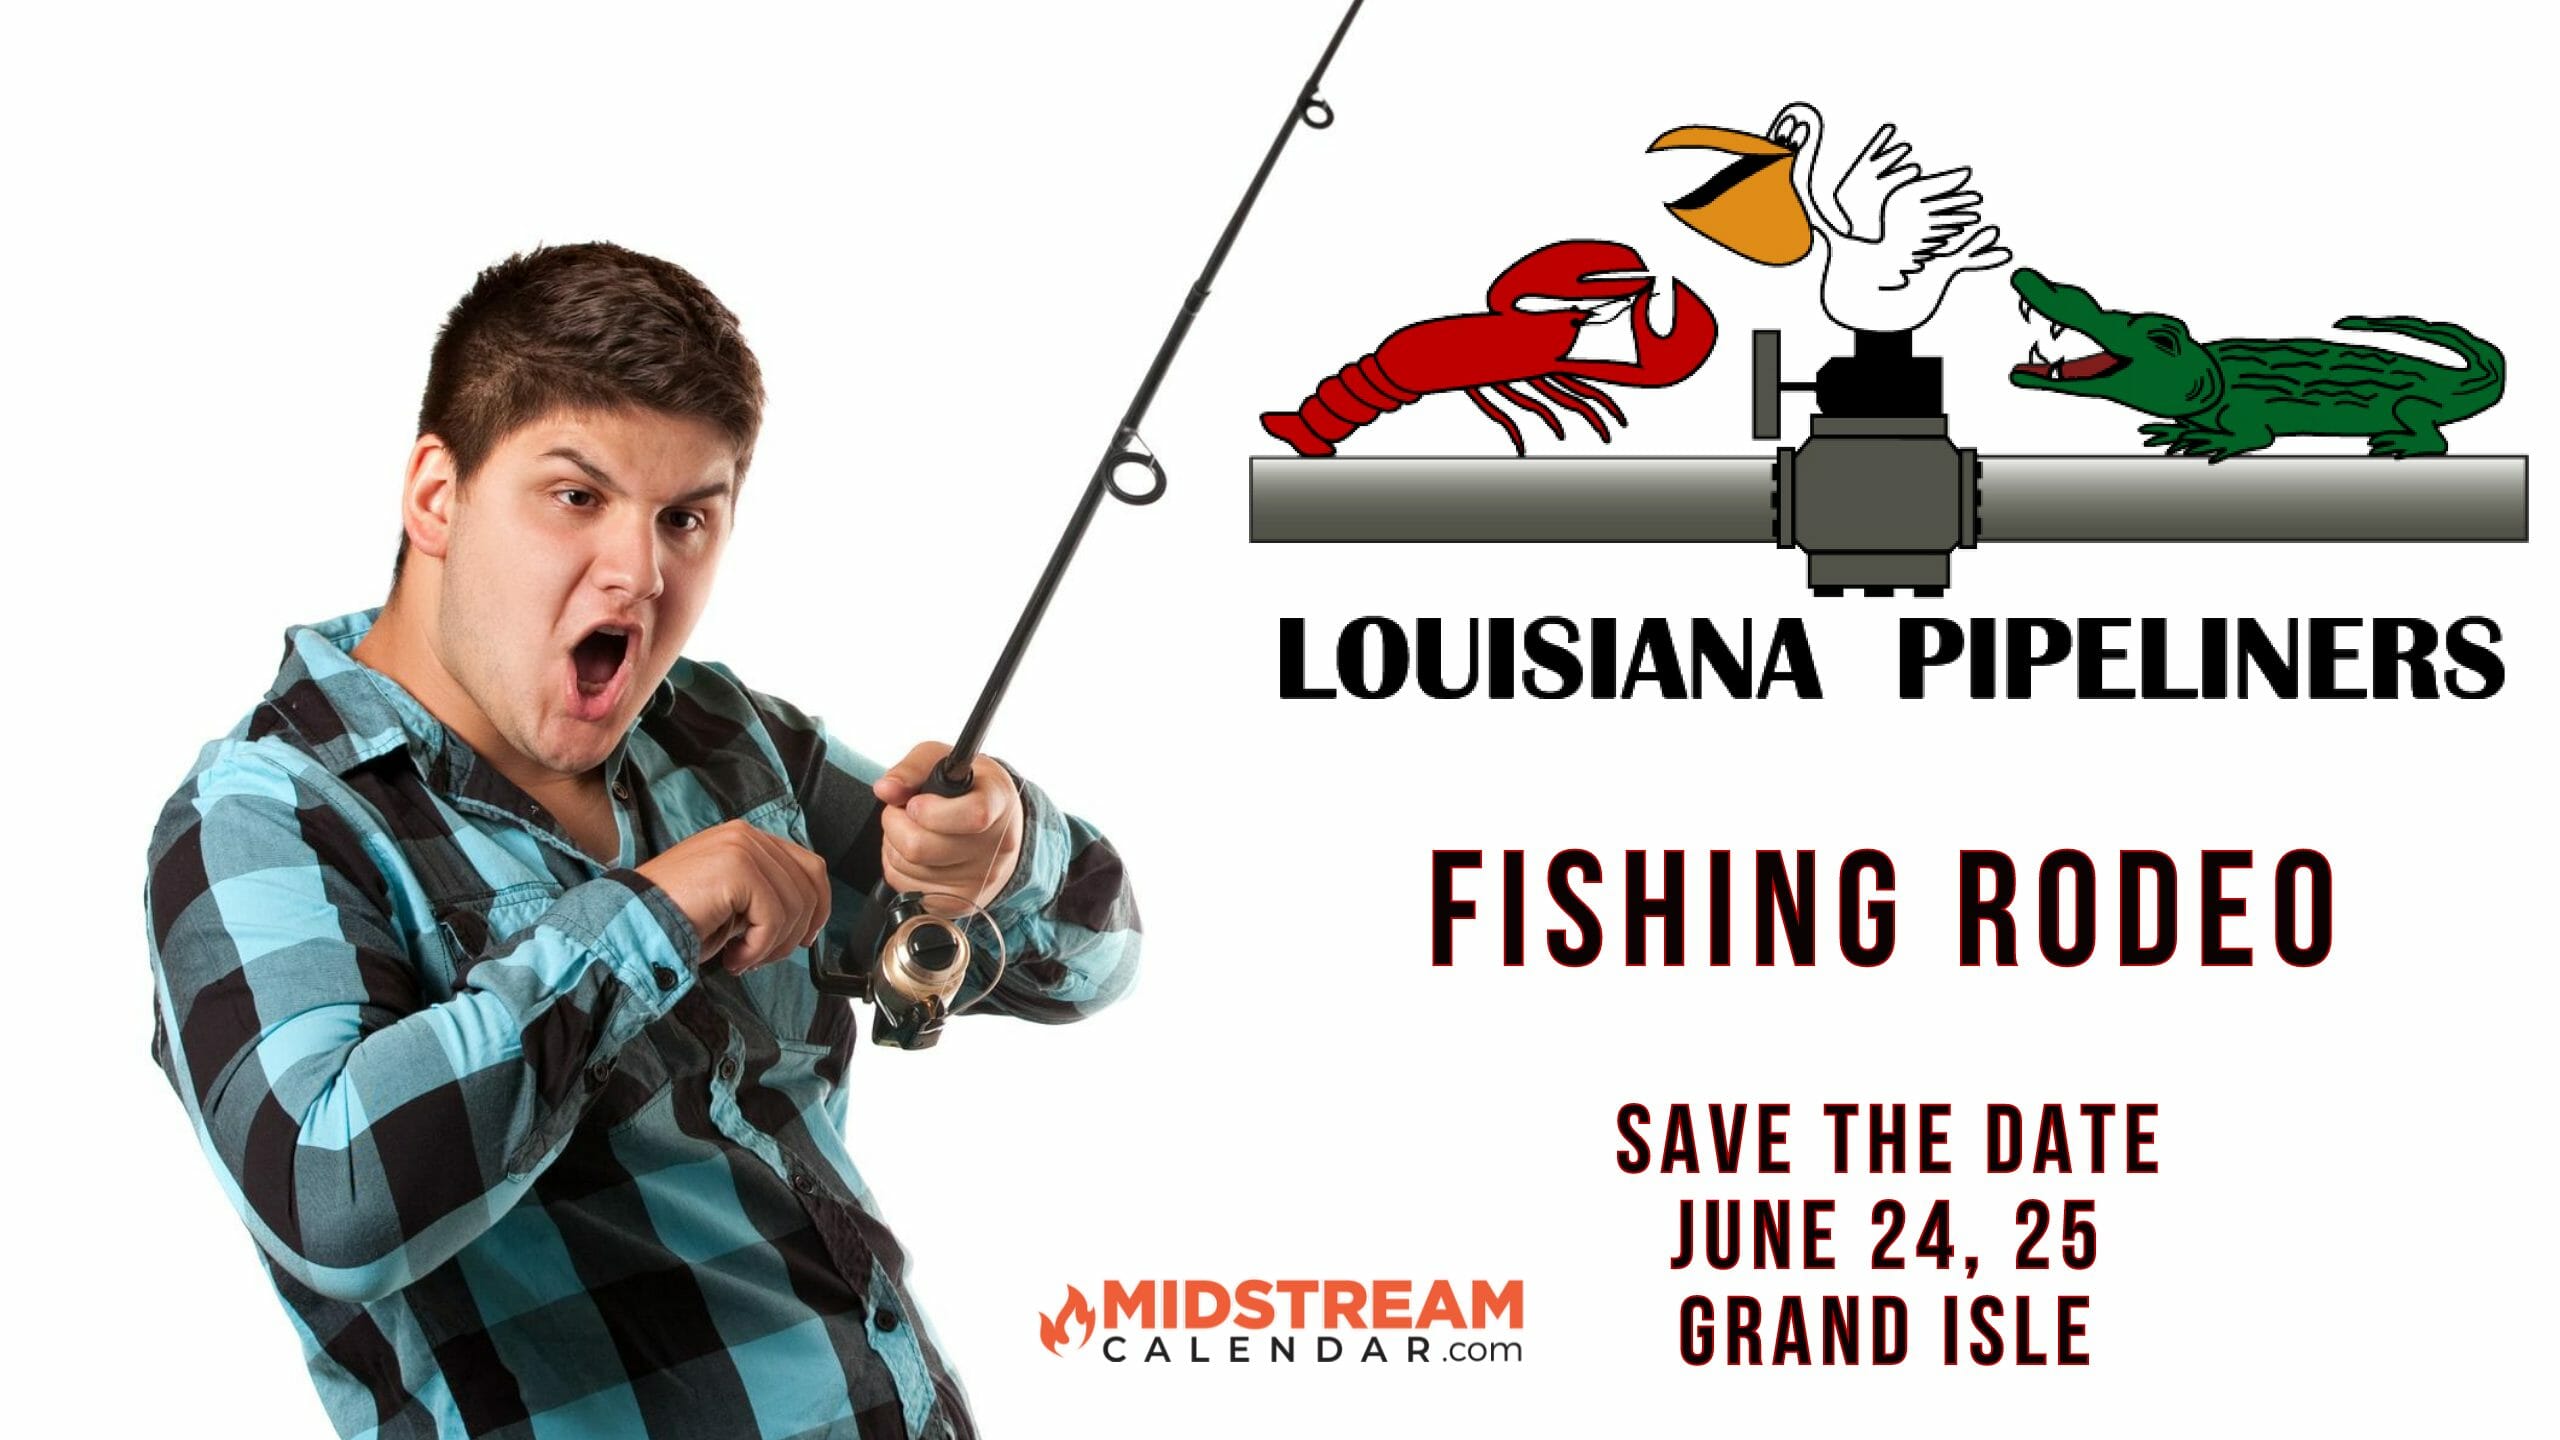 Midstream and Pipeline Events Louisiana